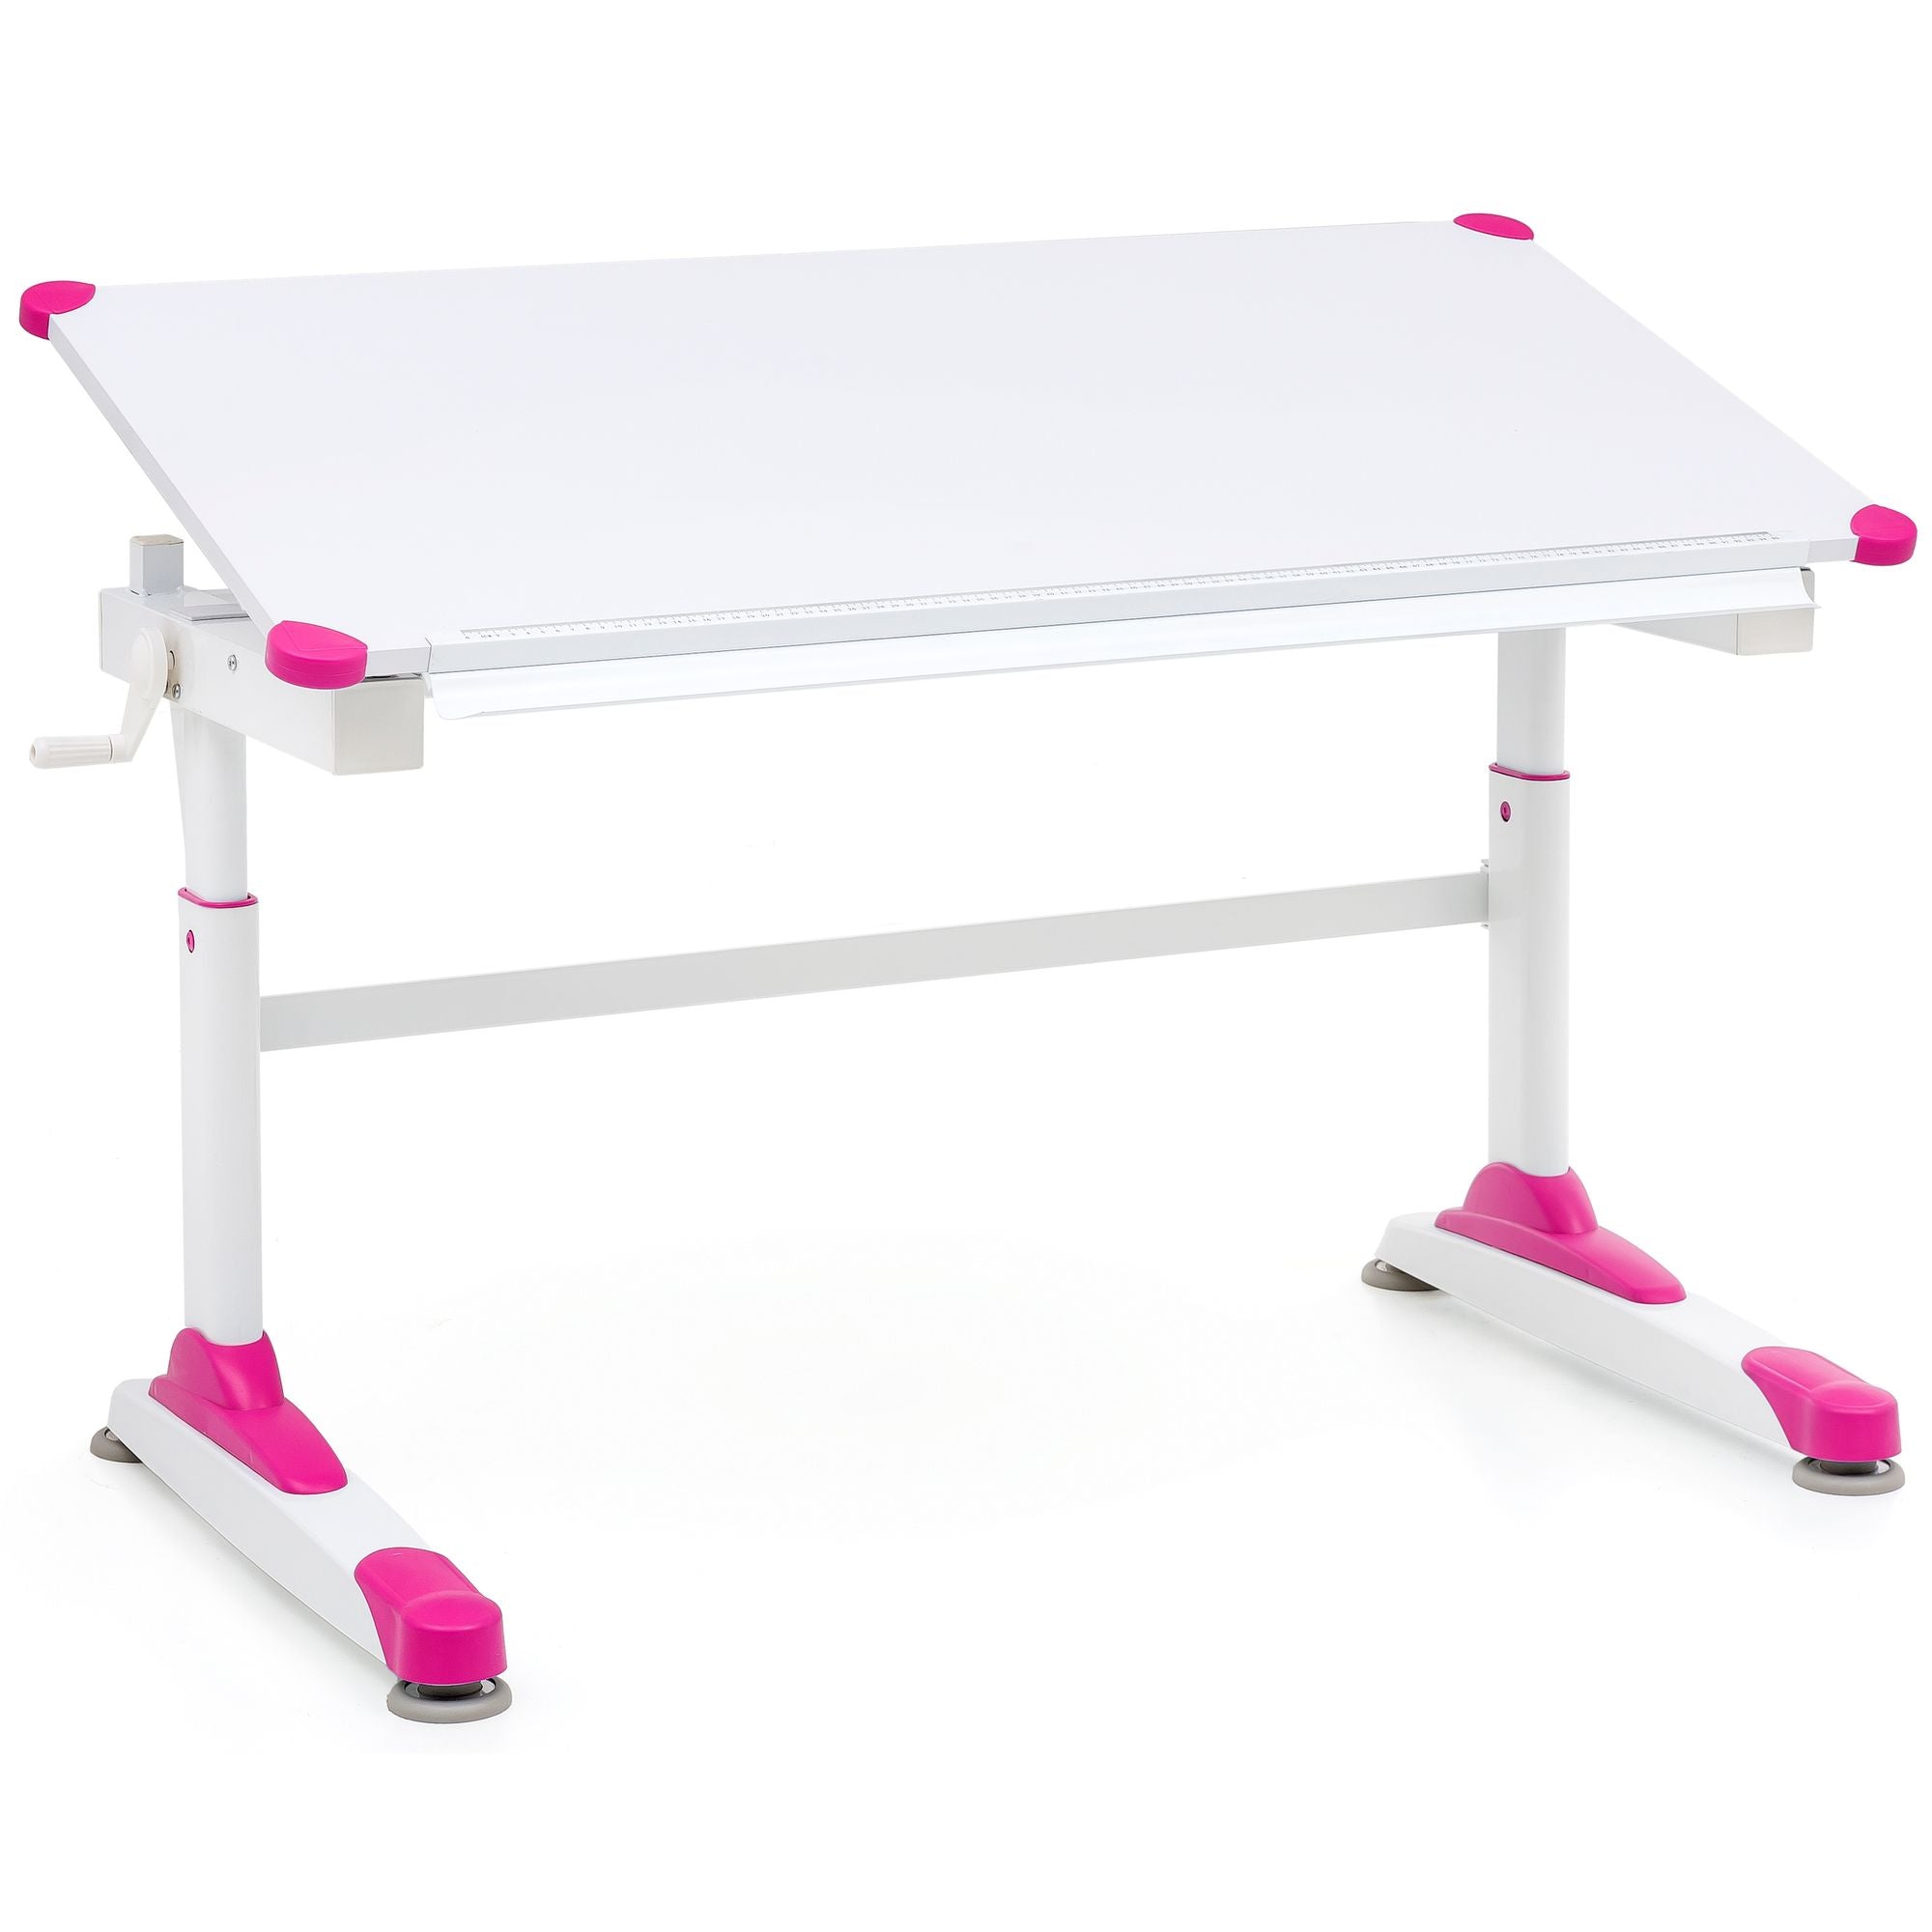 Nancy's Utiwa Children's Desk - Desk - Work Desk - Children's Table - Work Table - Standing Desk - Pink/Blue - Height Adjustable - 119x67 cm